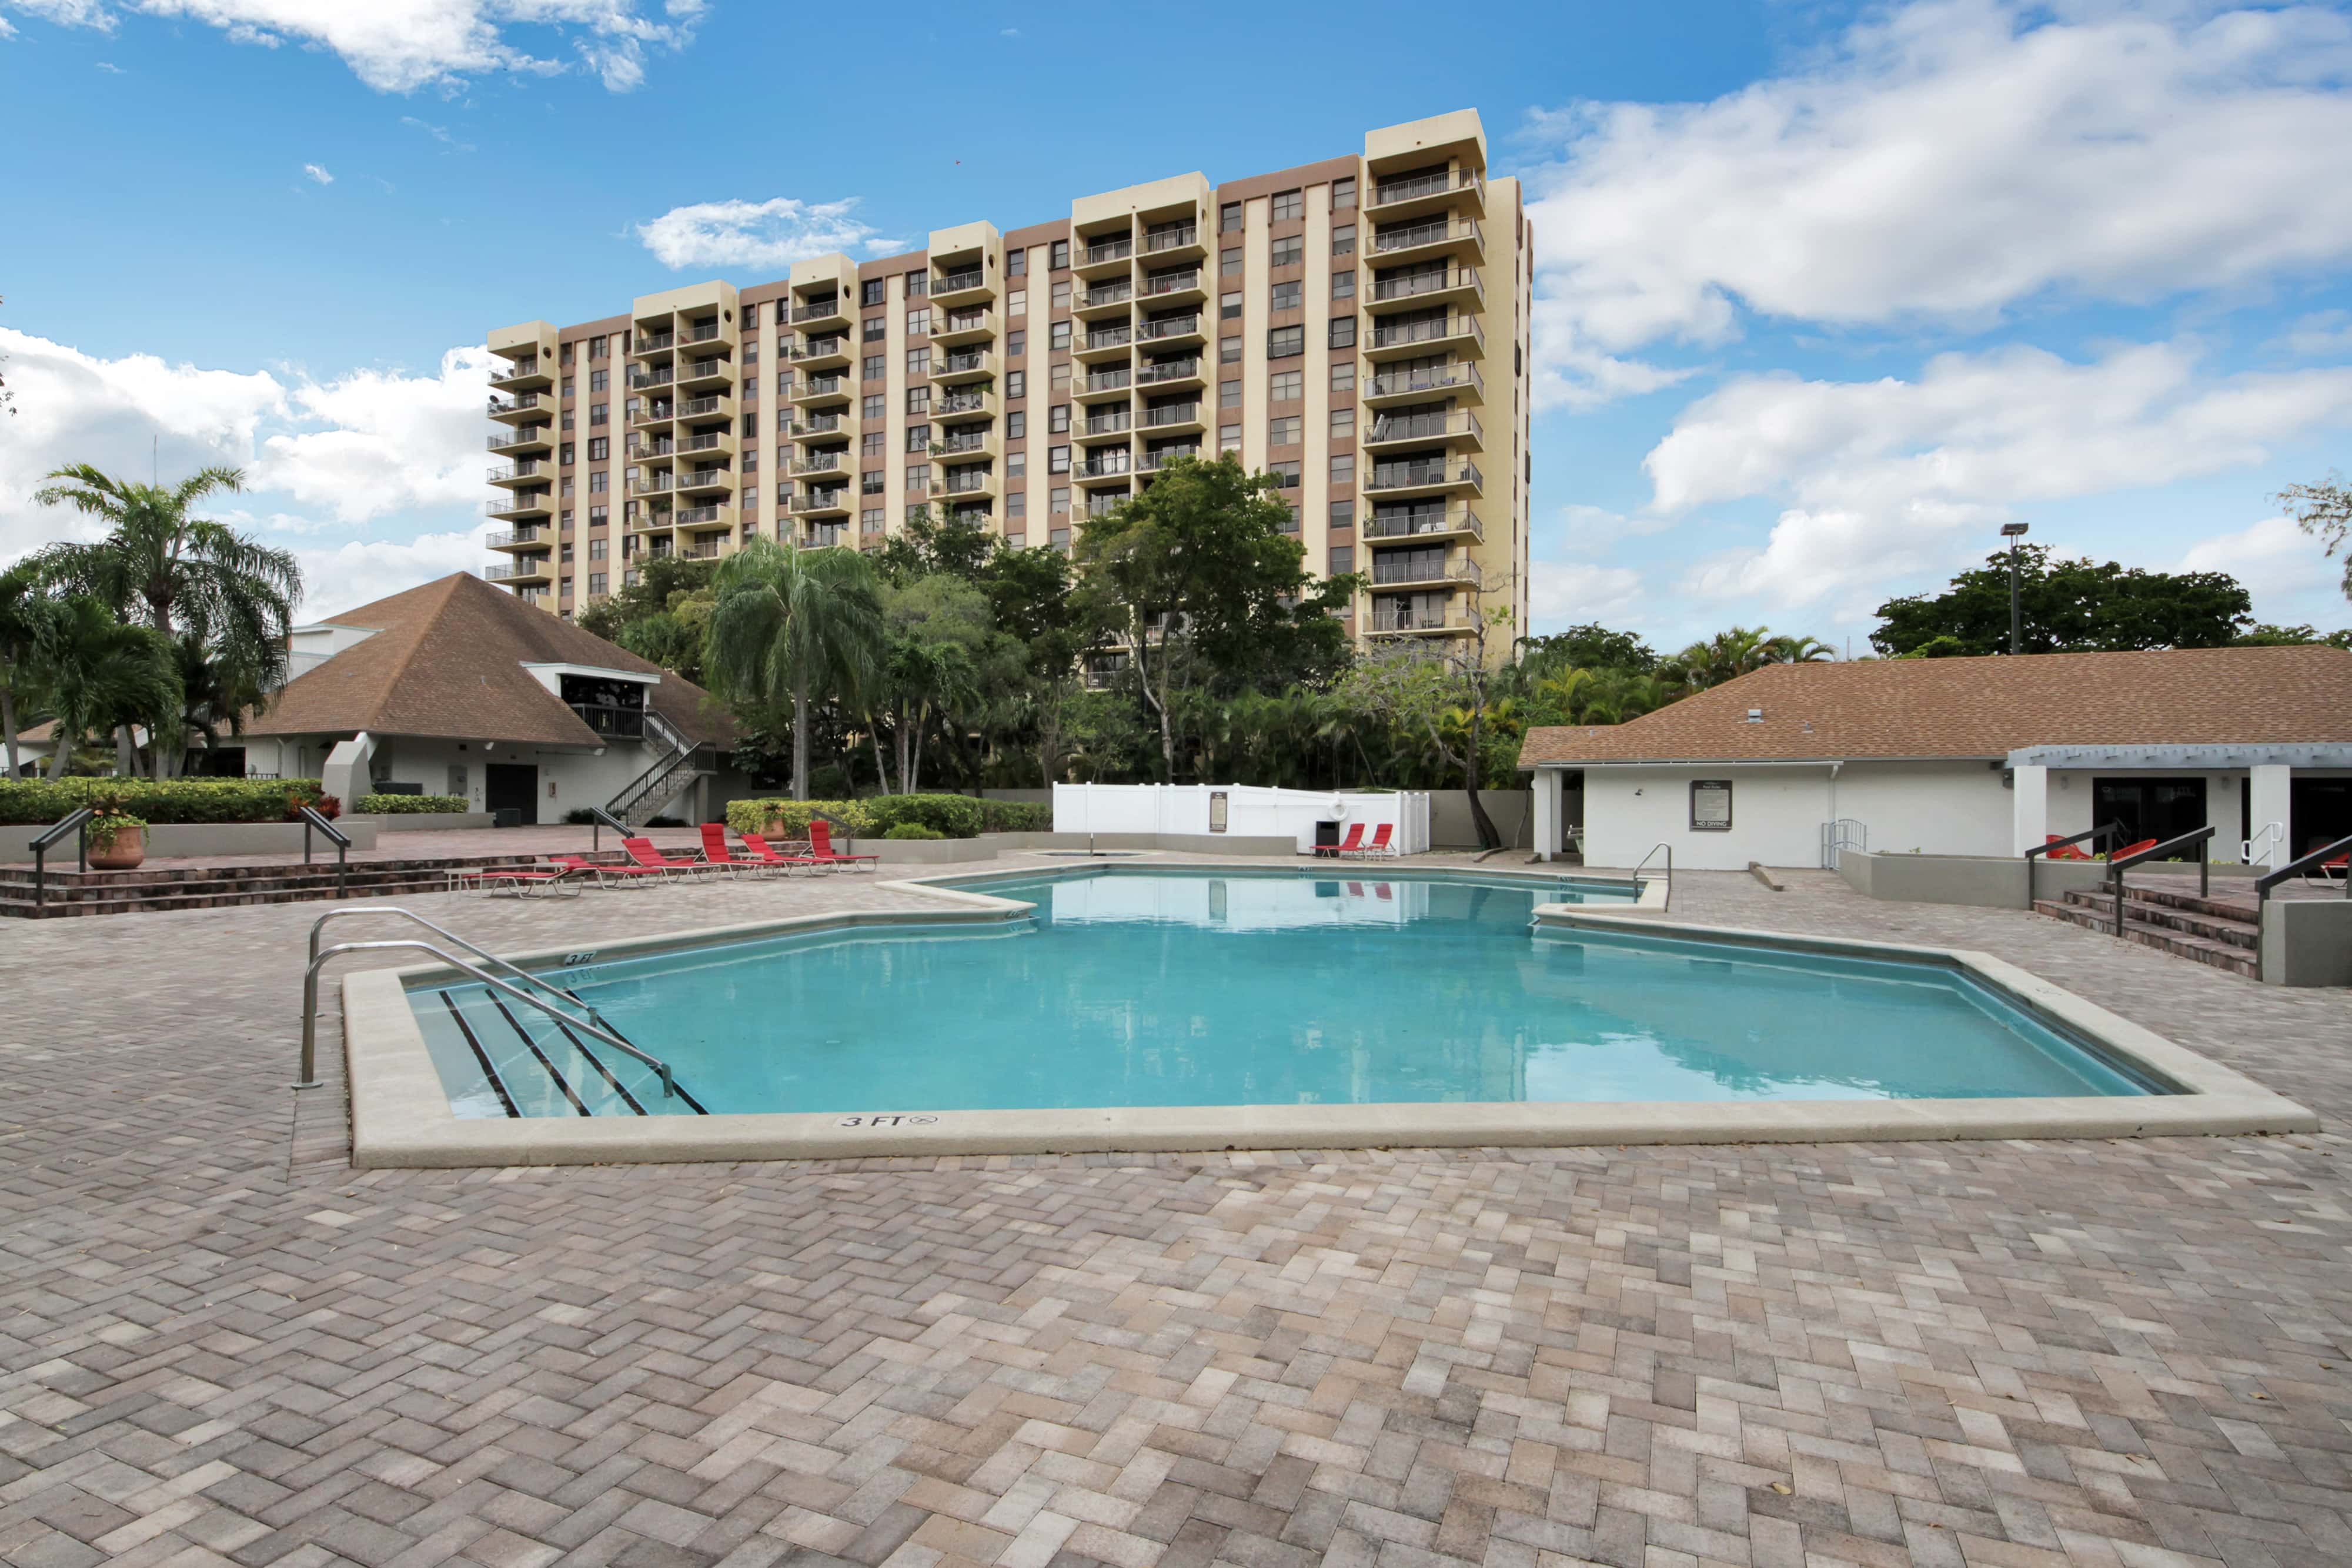 Biscayne Apartments - North Miami, FL, US, apartment complex